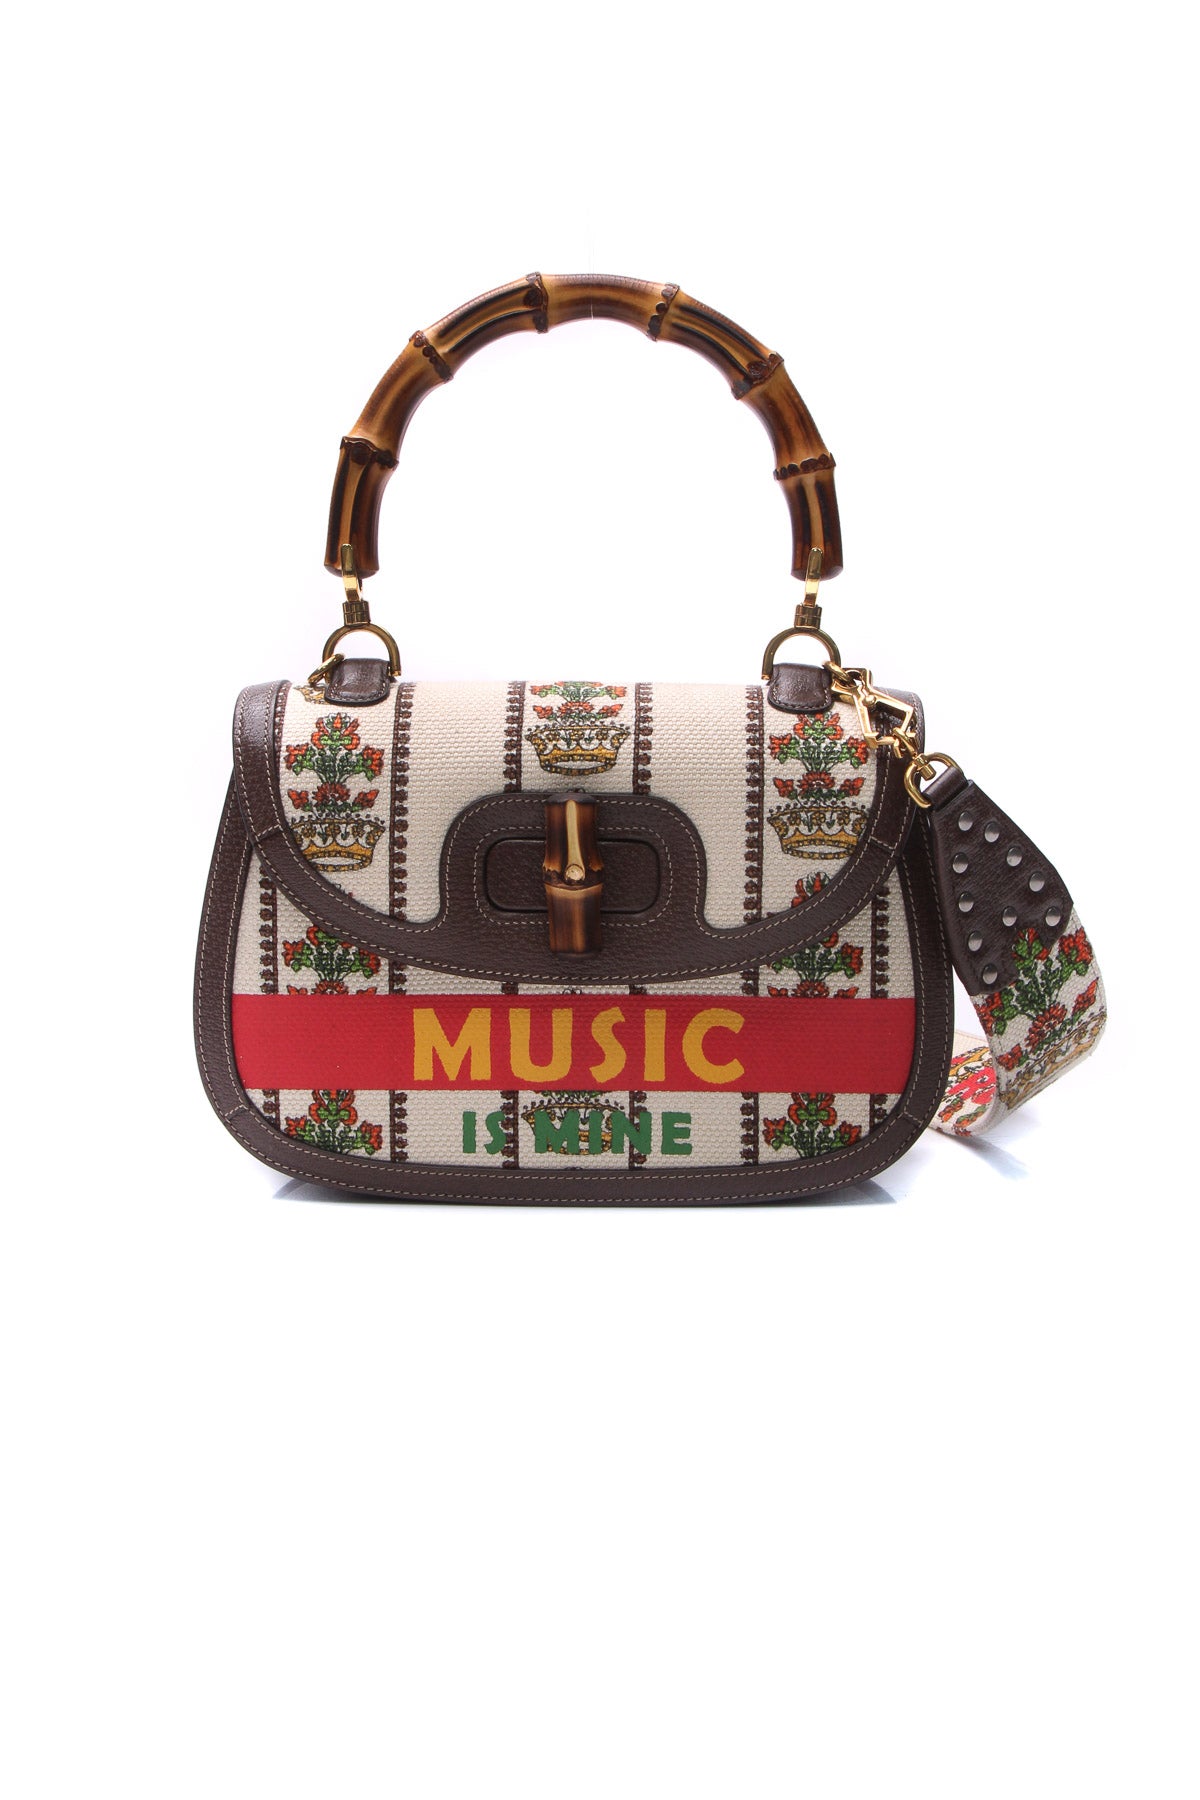 1990s Chanel Jumbo Vintage Bag  Chanel handbags, Chanel jumbo, Chanel flap  bag